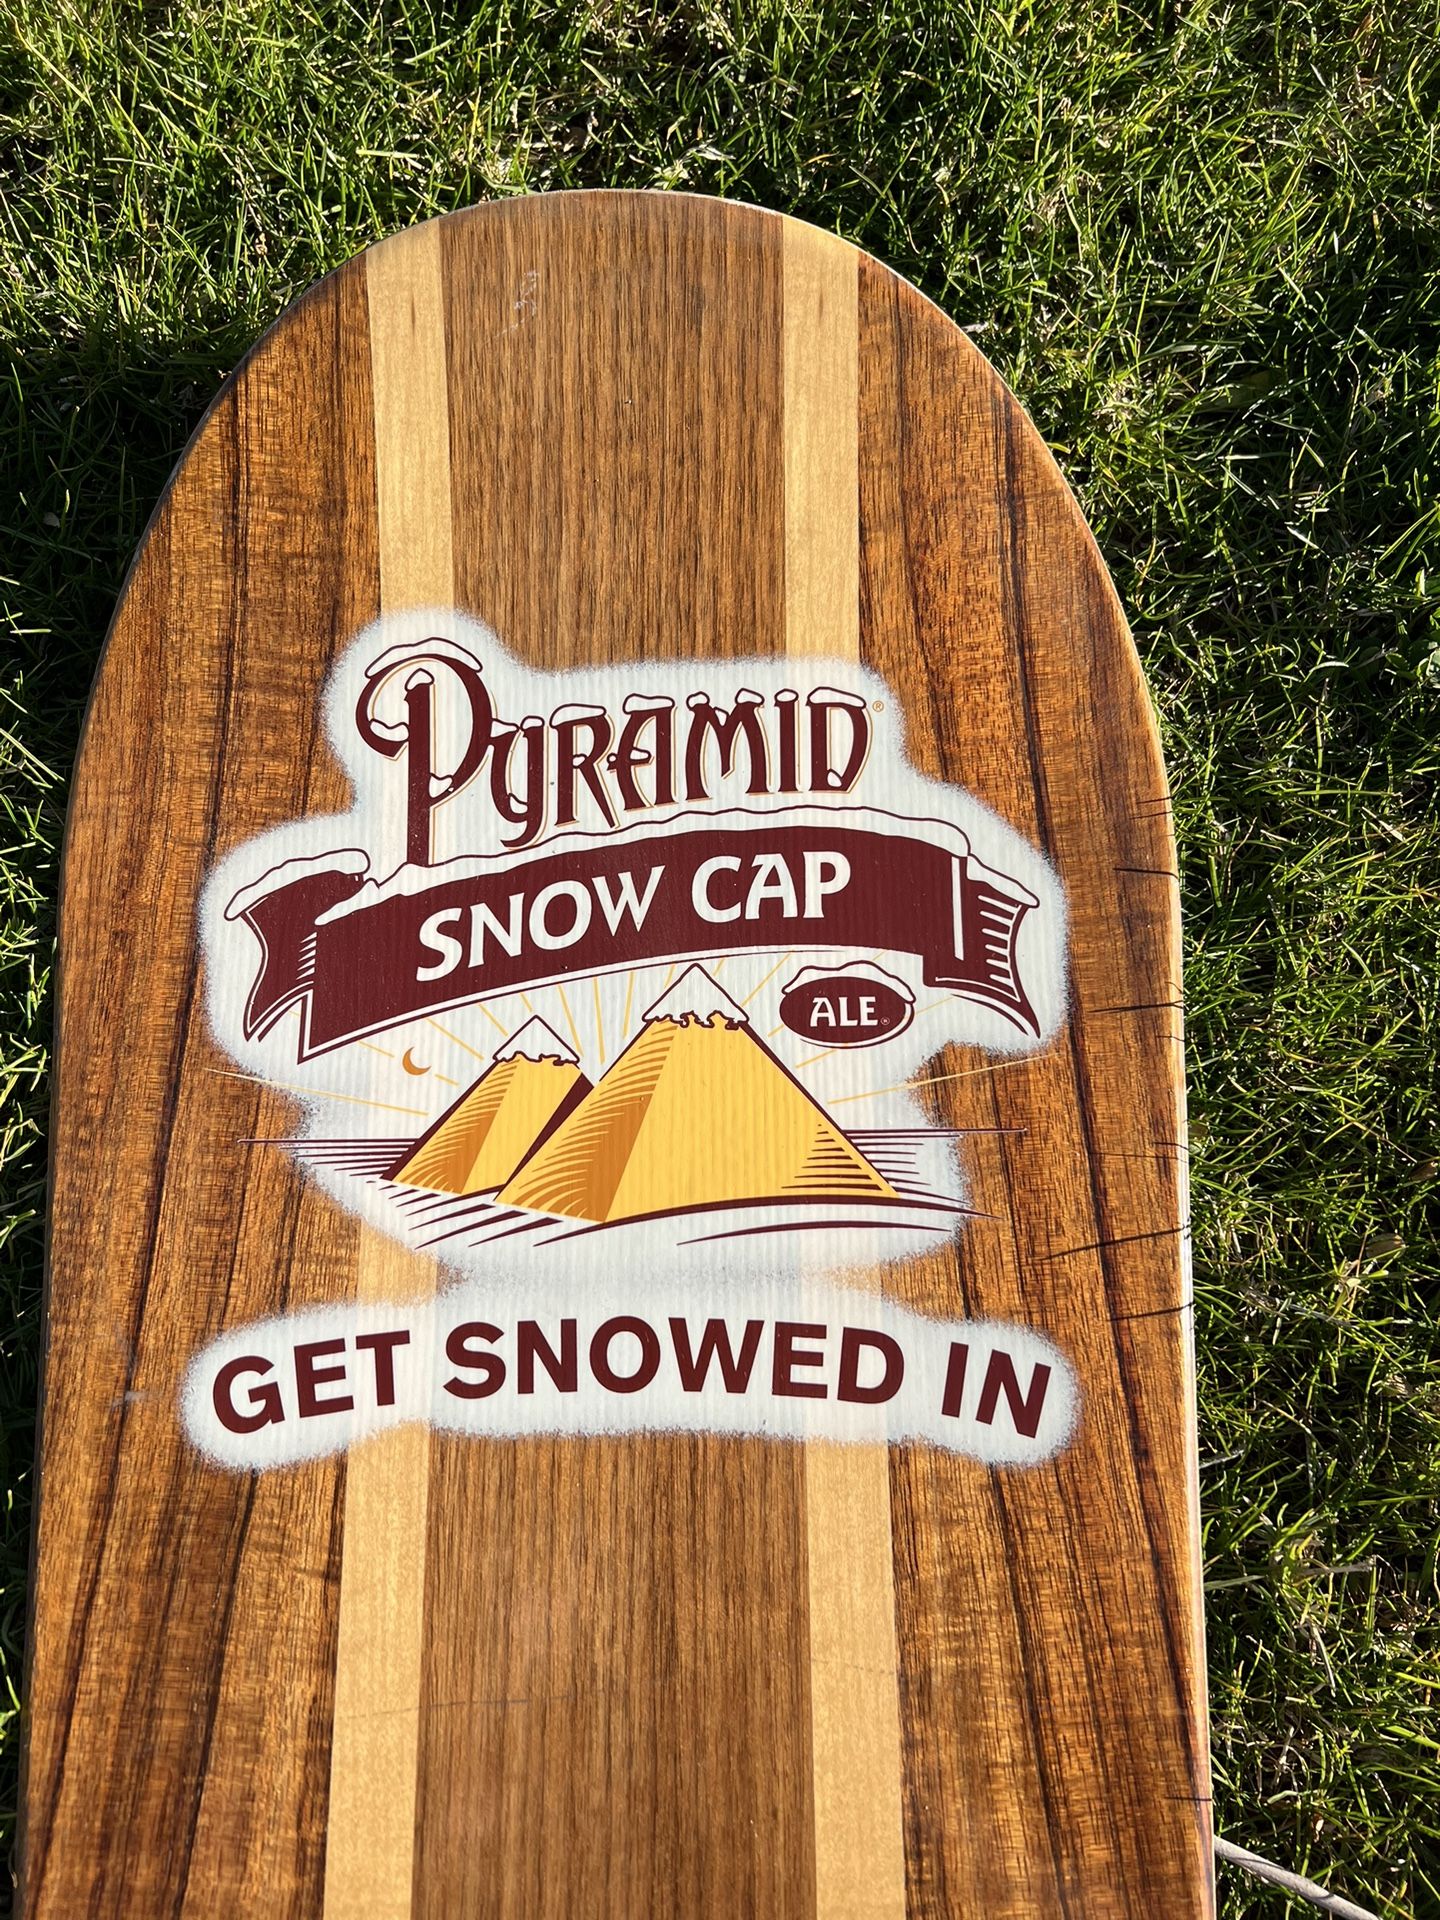 Snow Board Wall Art Pyramid Snow Cap ale